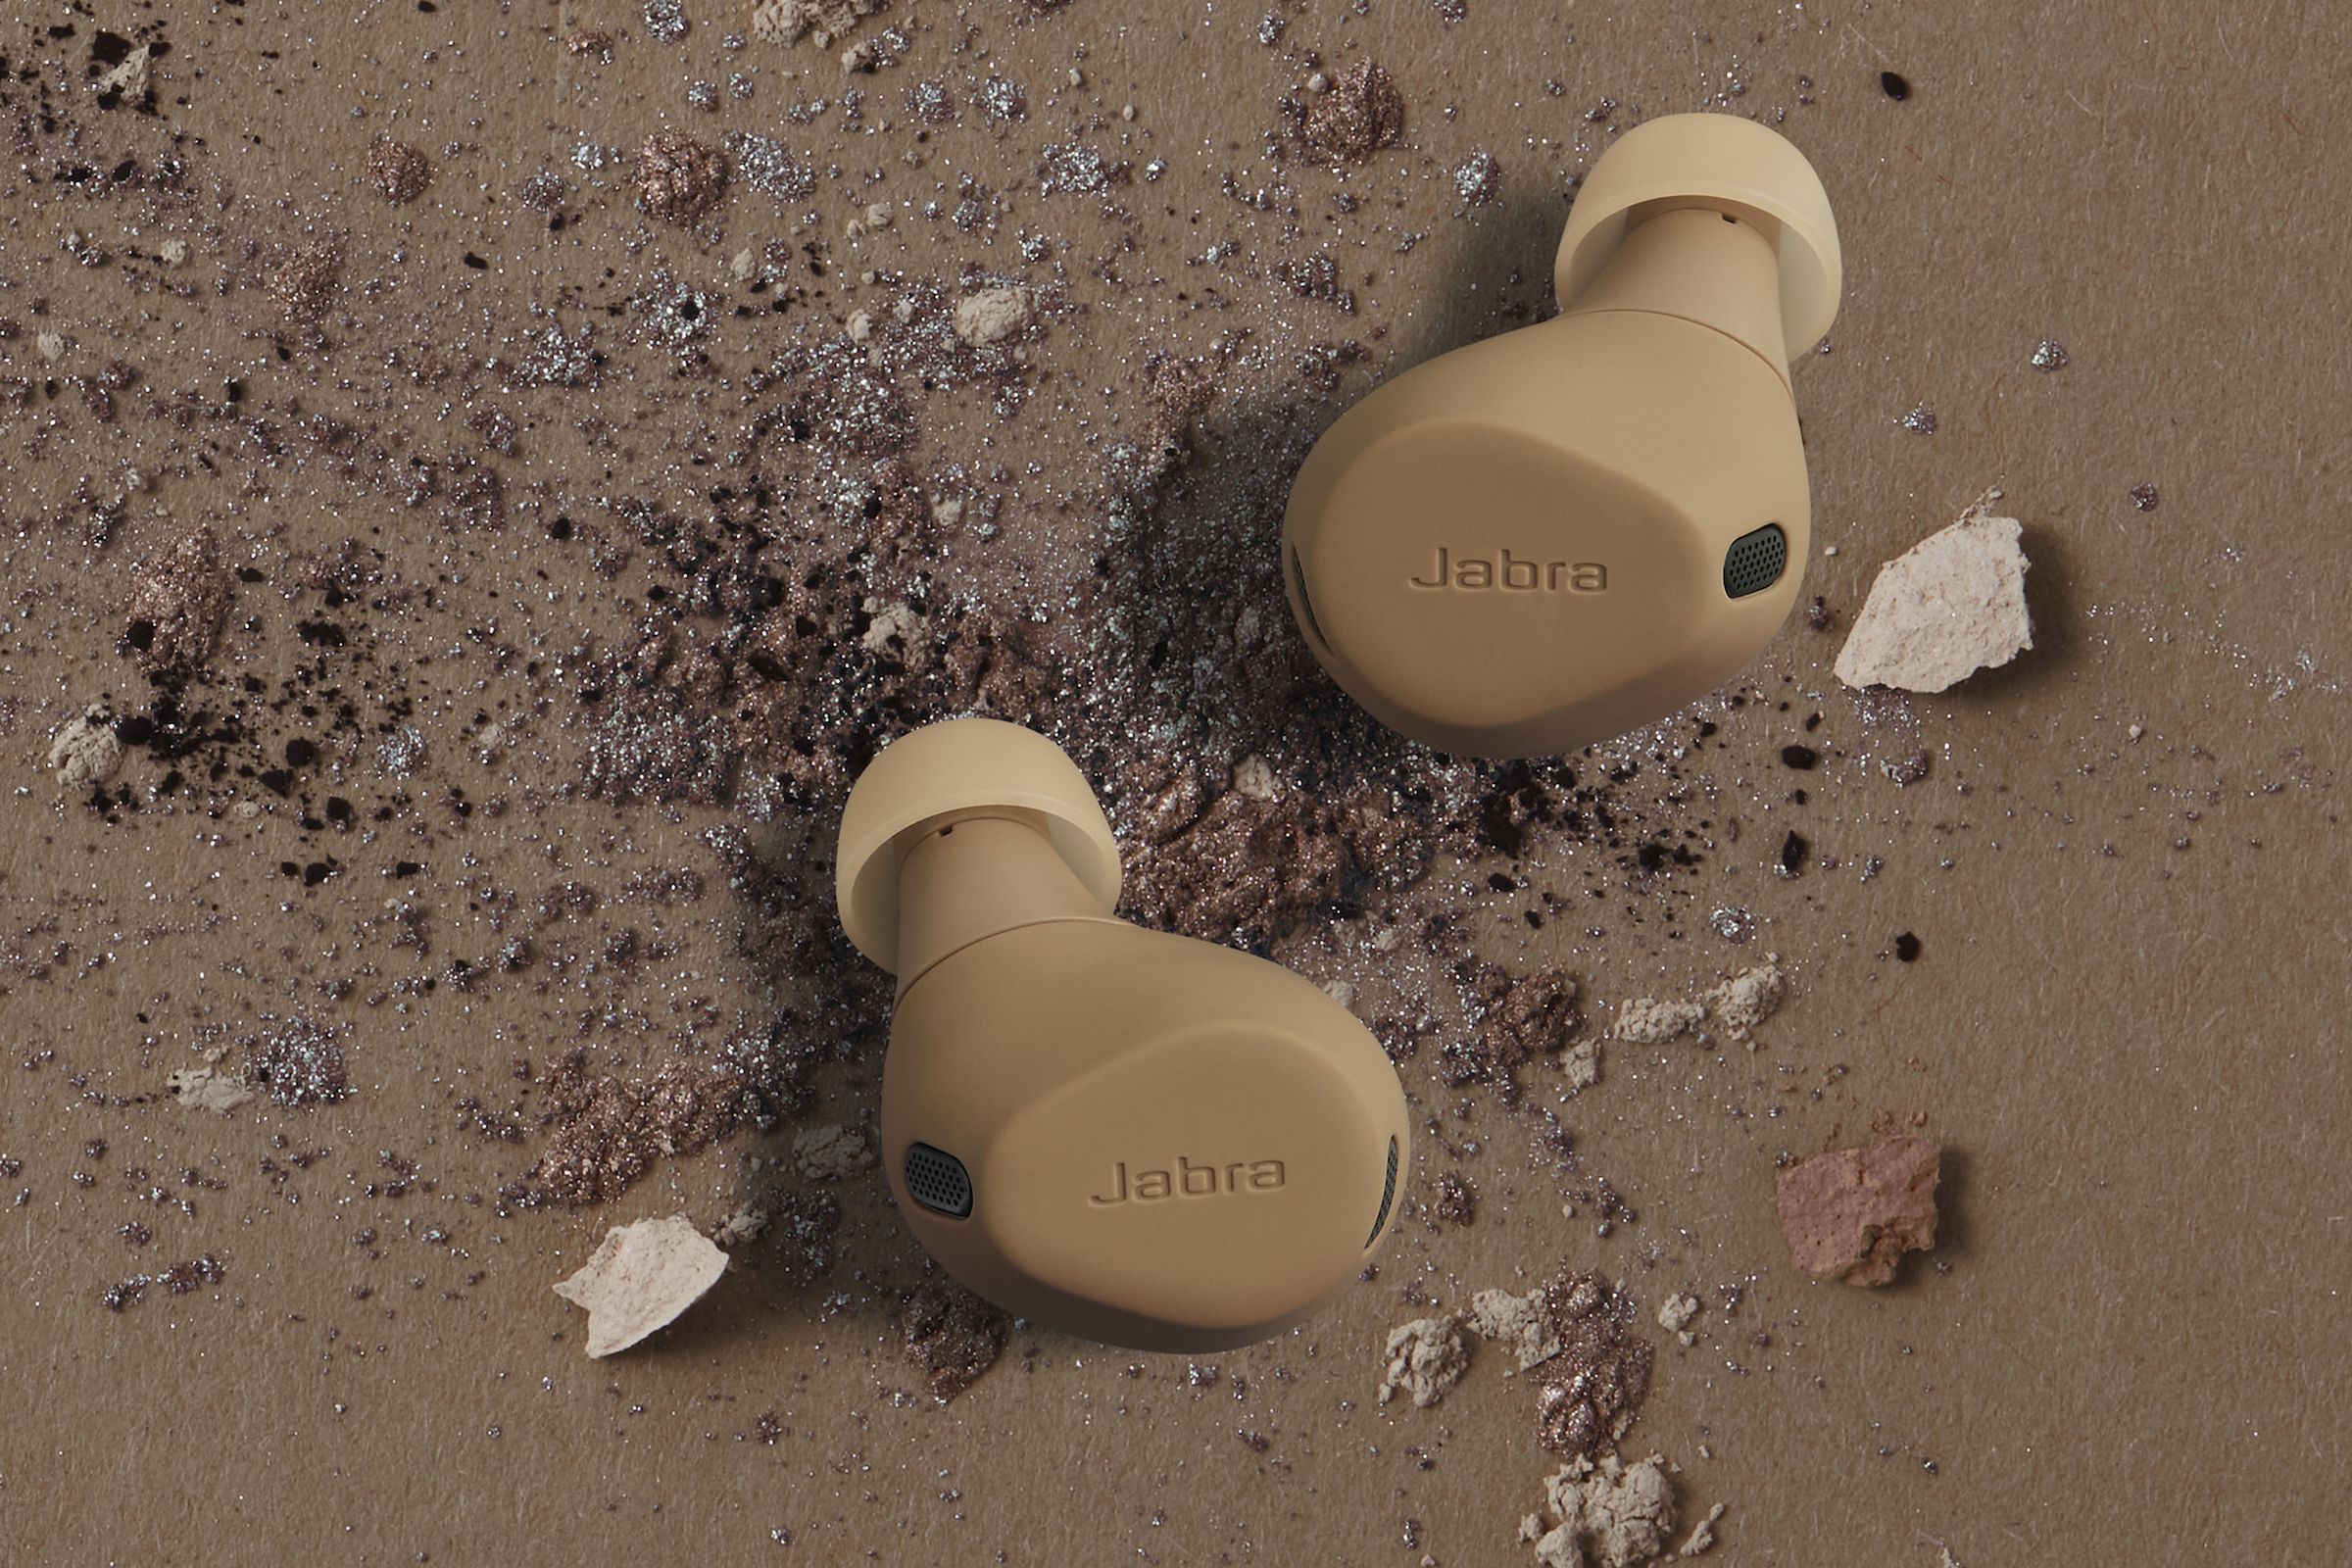 A marketing image of Jabra’s Elite 8 Active earbuds.